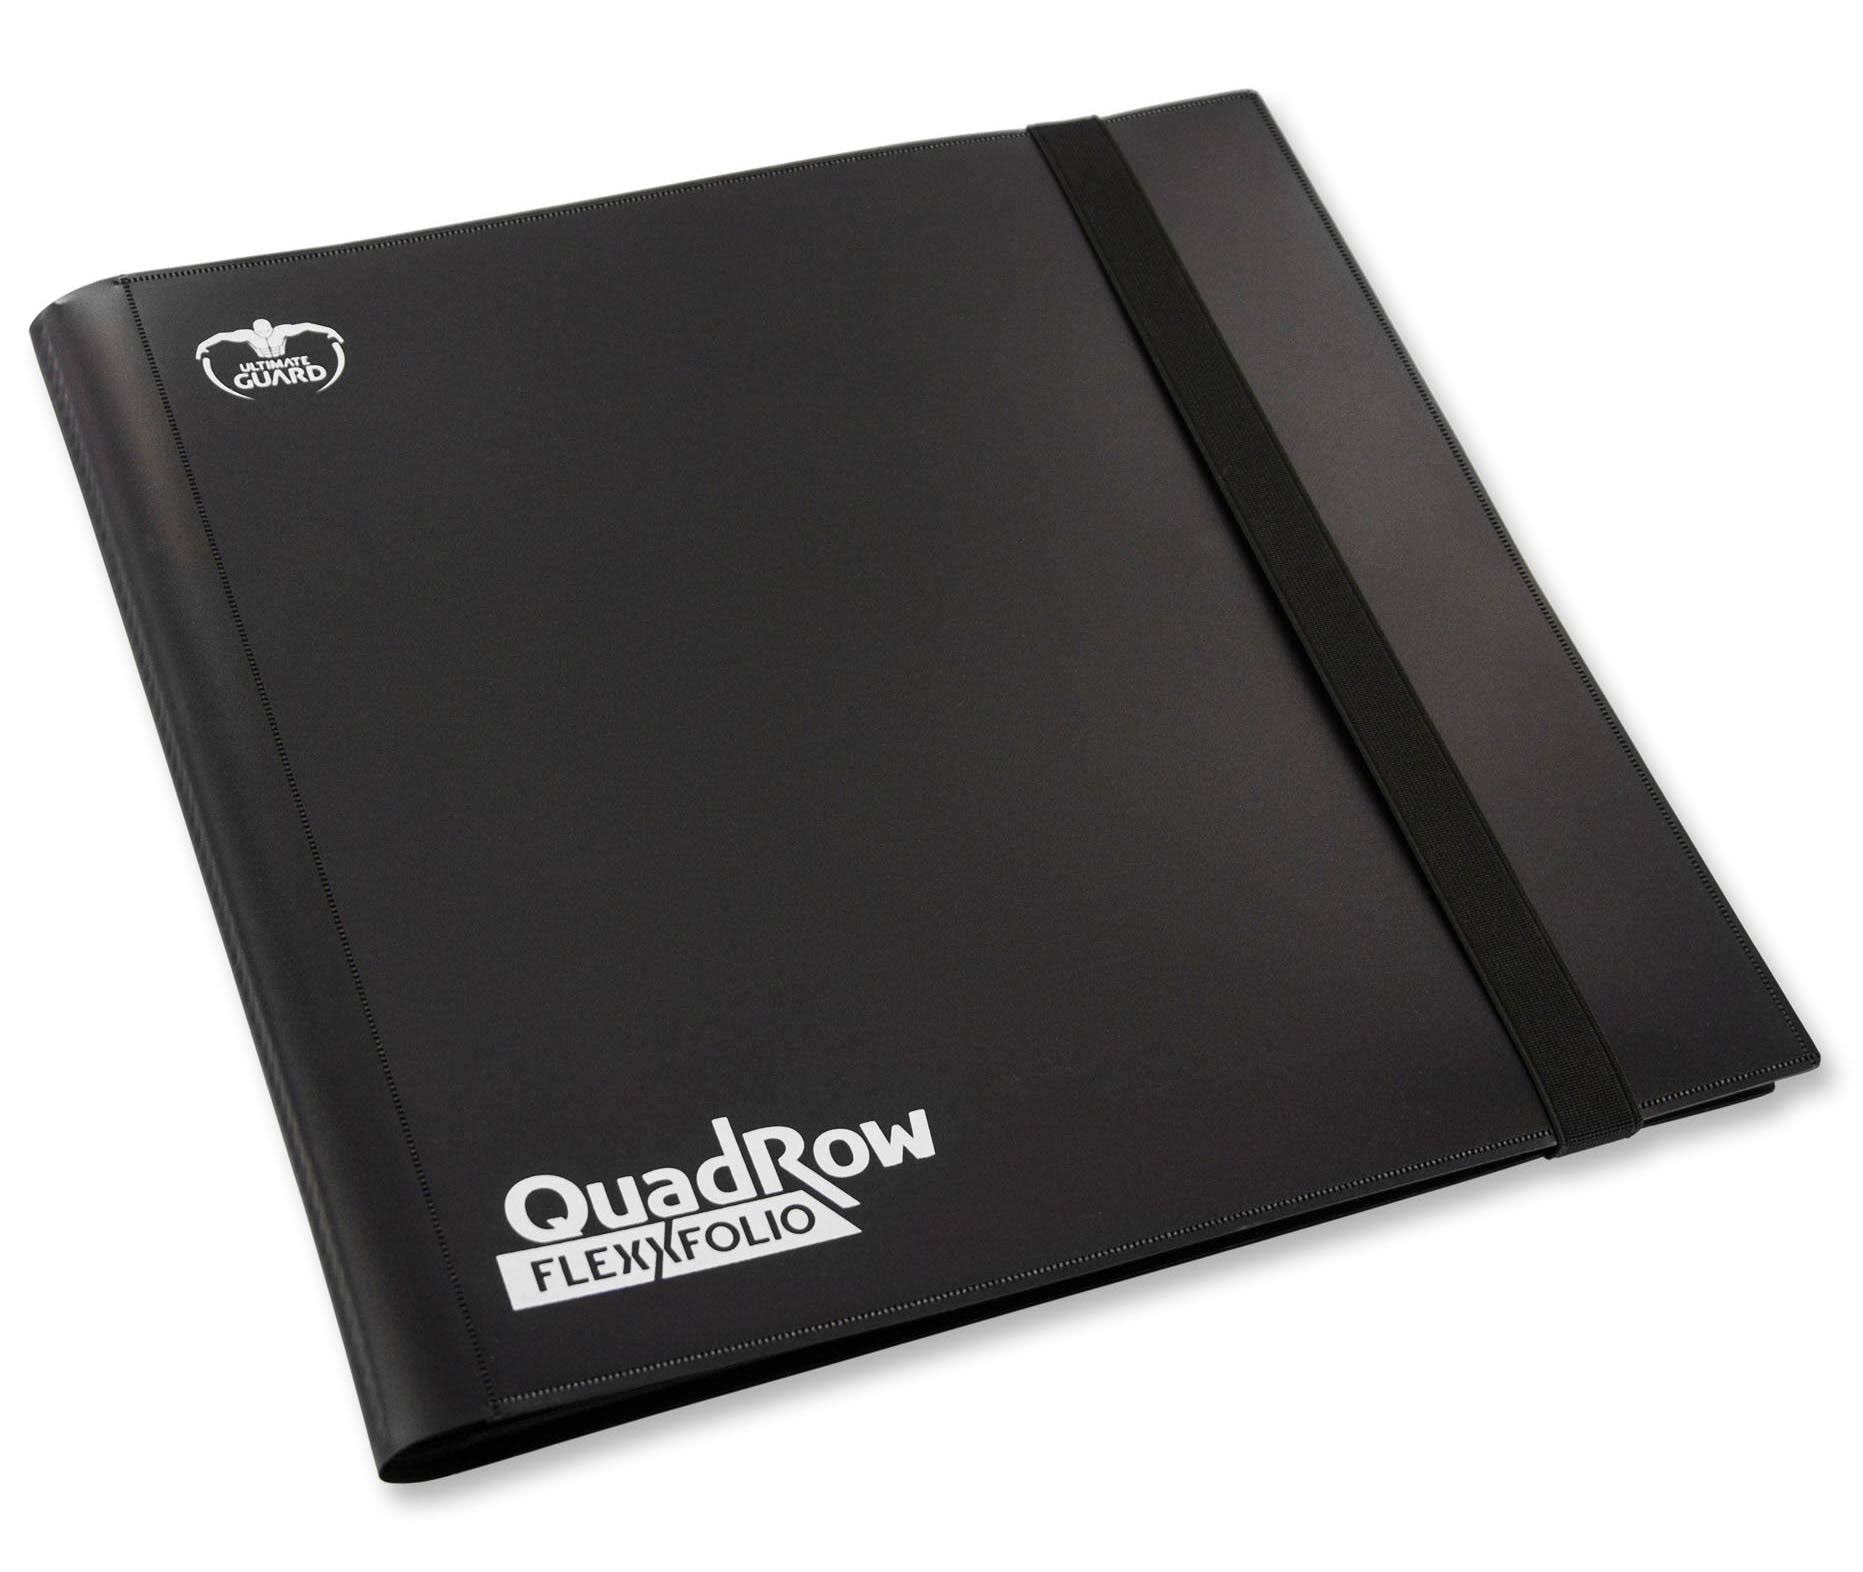 Ultimate Guard Binder QuadRow FlexXfolio Portfolio - Black, 12 Pocket